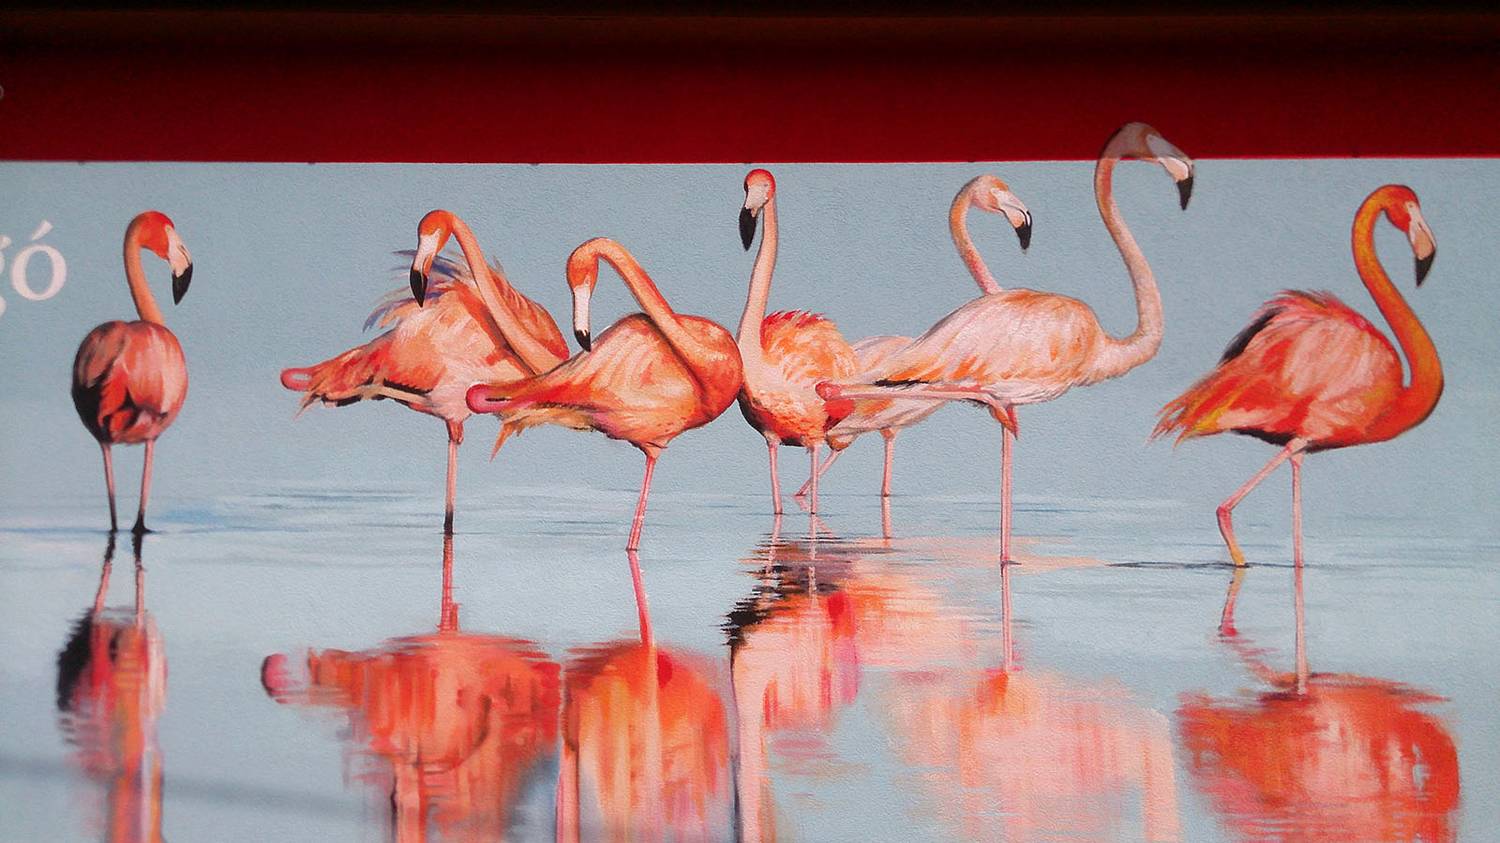 Flamingo- Neopaint Works